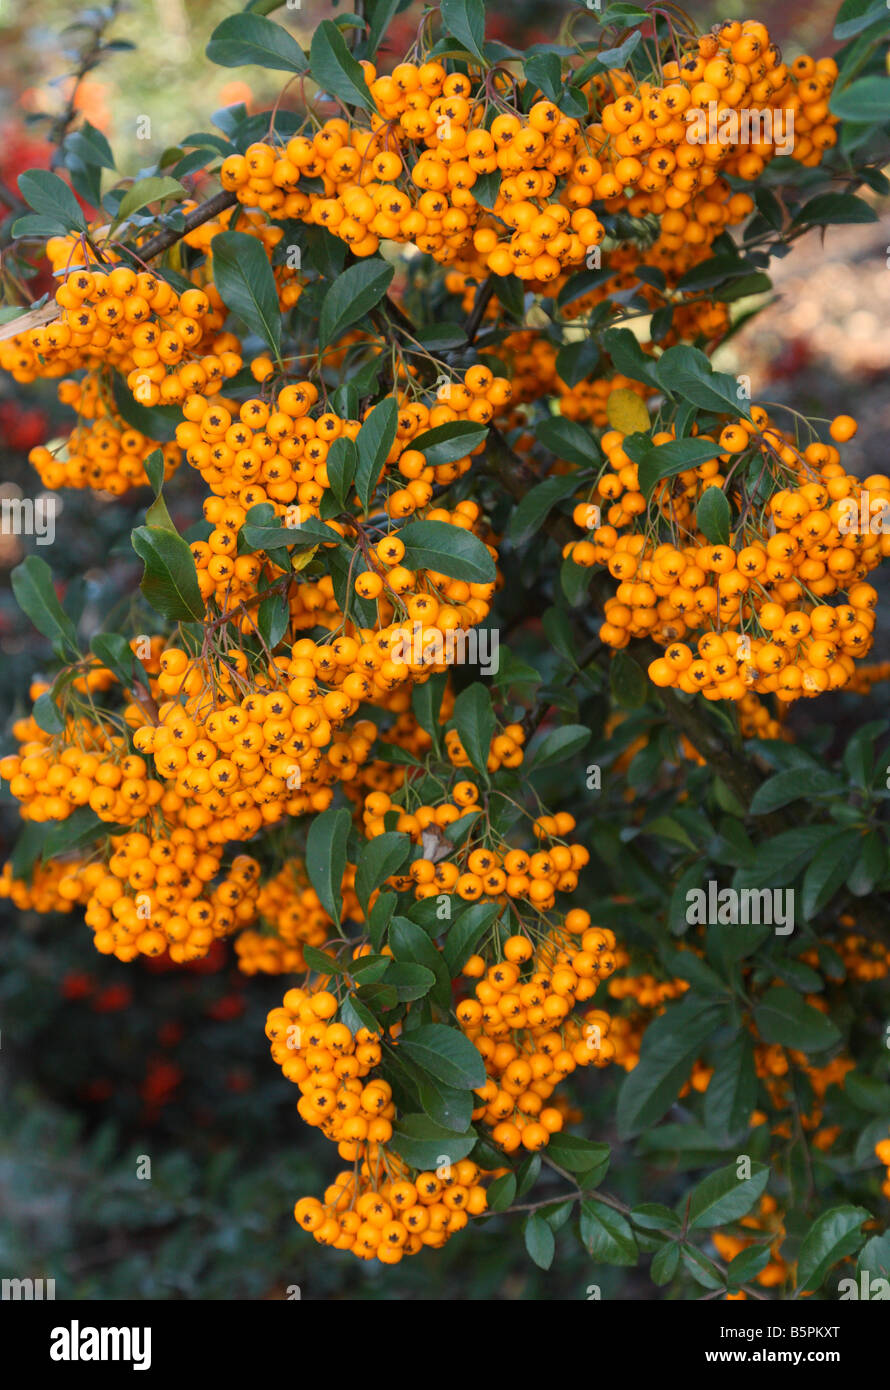 Firethorn yellow berries Pyracantha Stock Photo